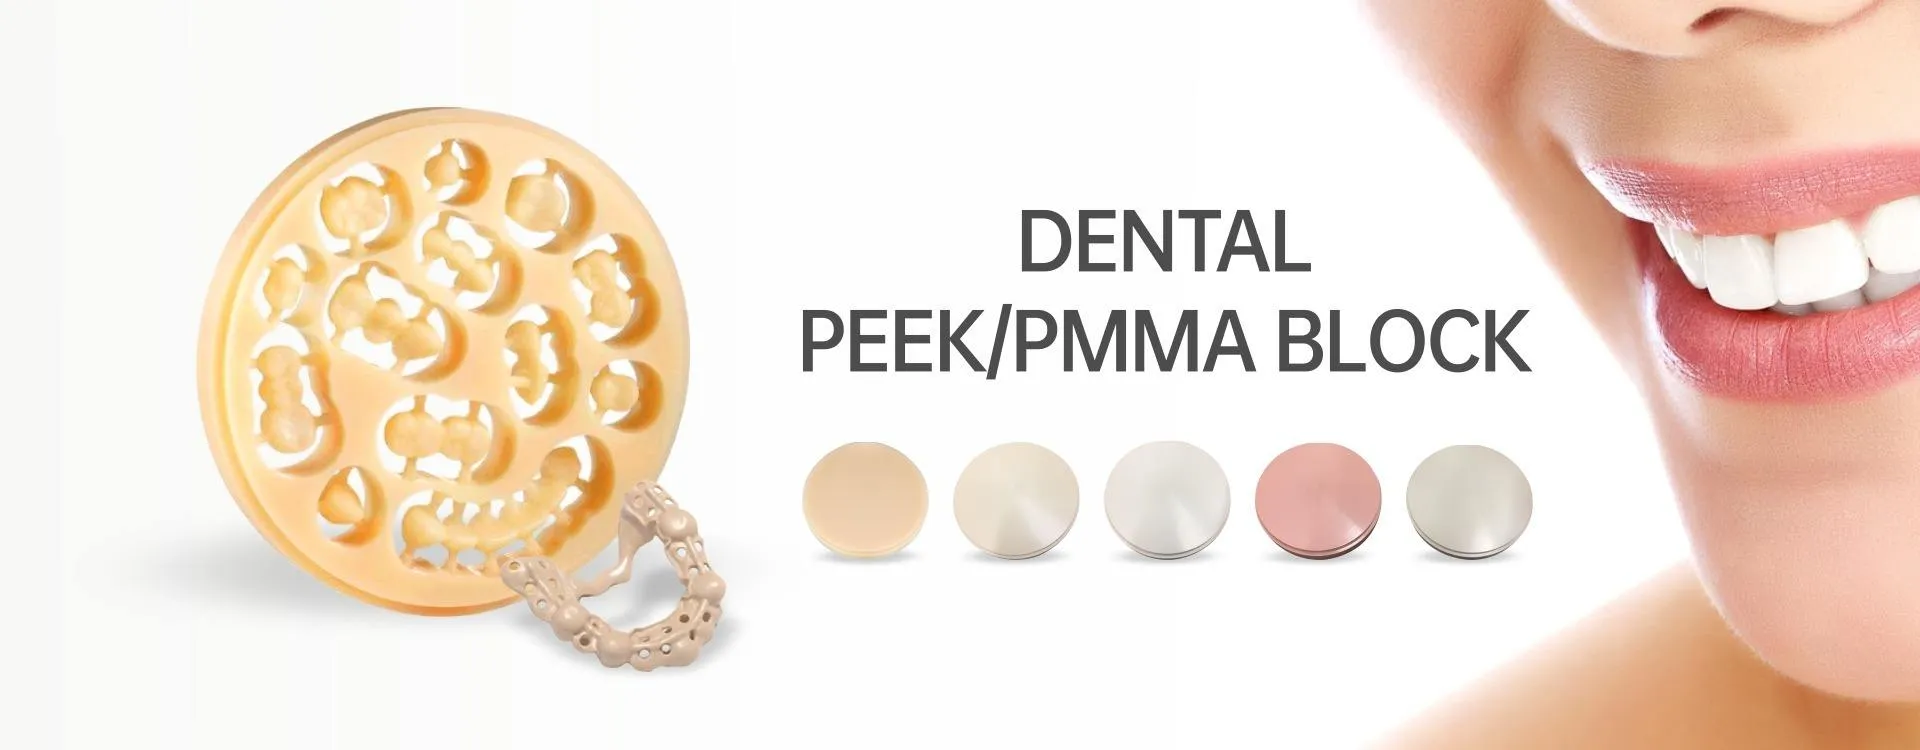 dental peek blank dental PMMA blank  honchon smile